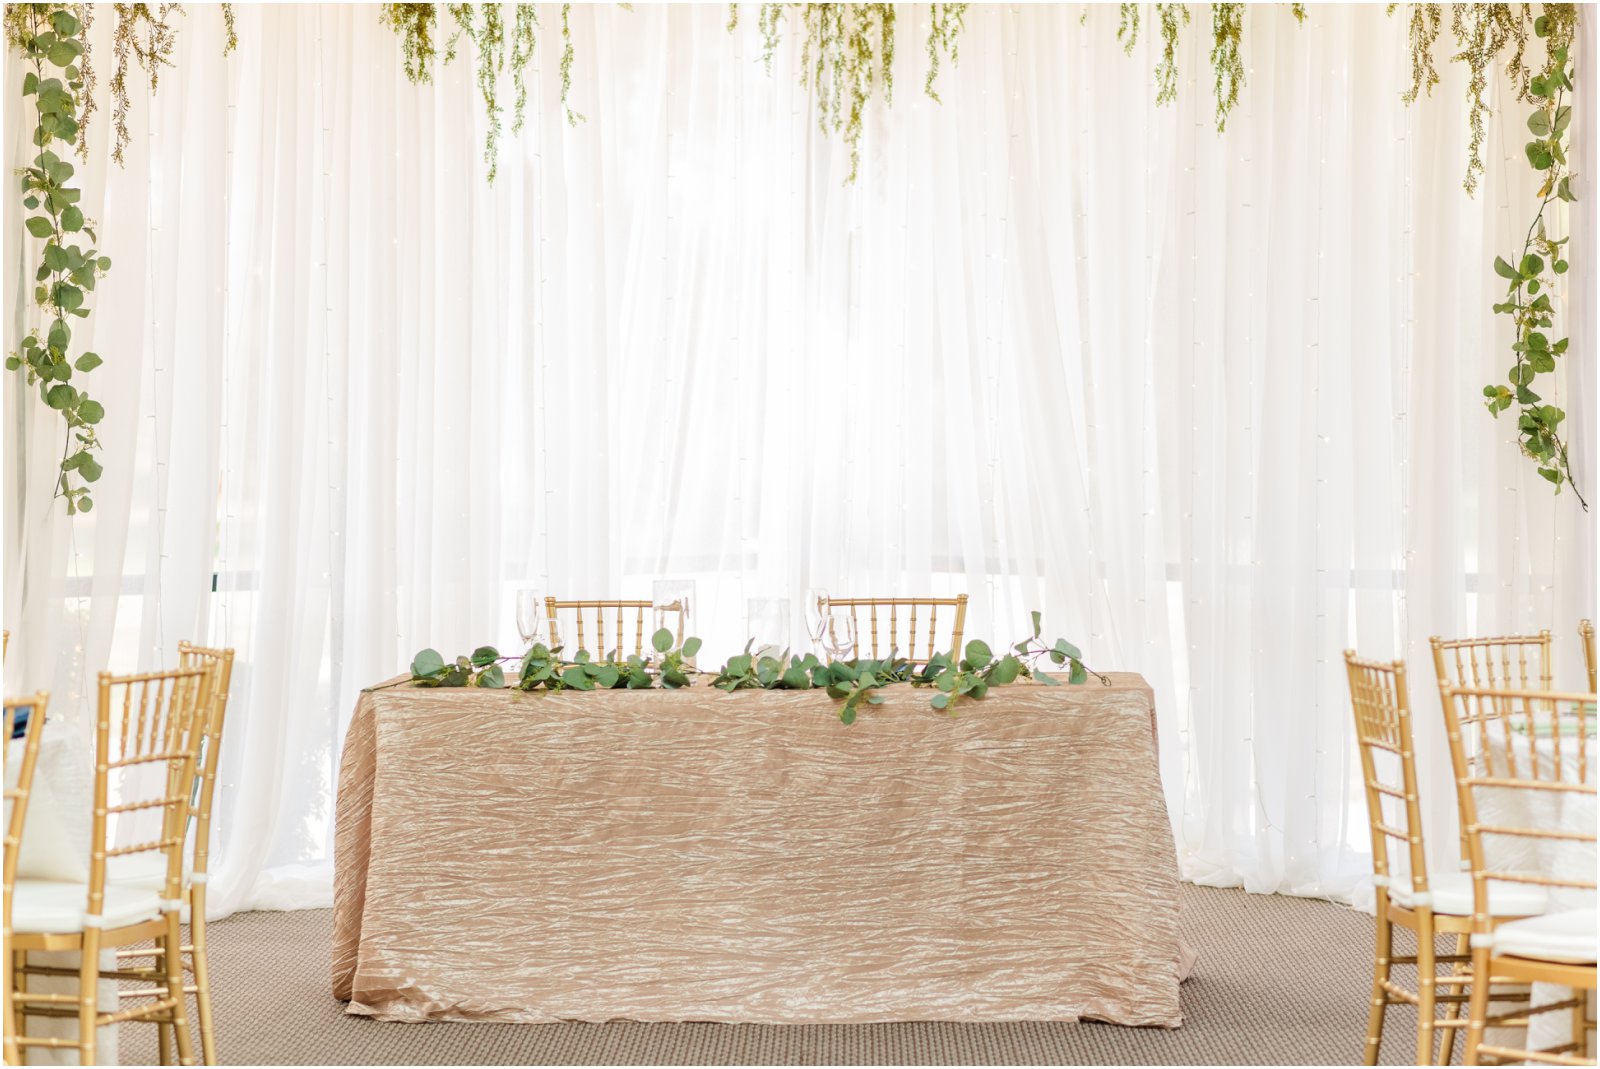 simple head table at wedding reception